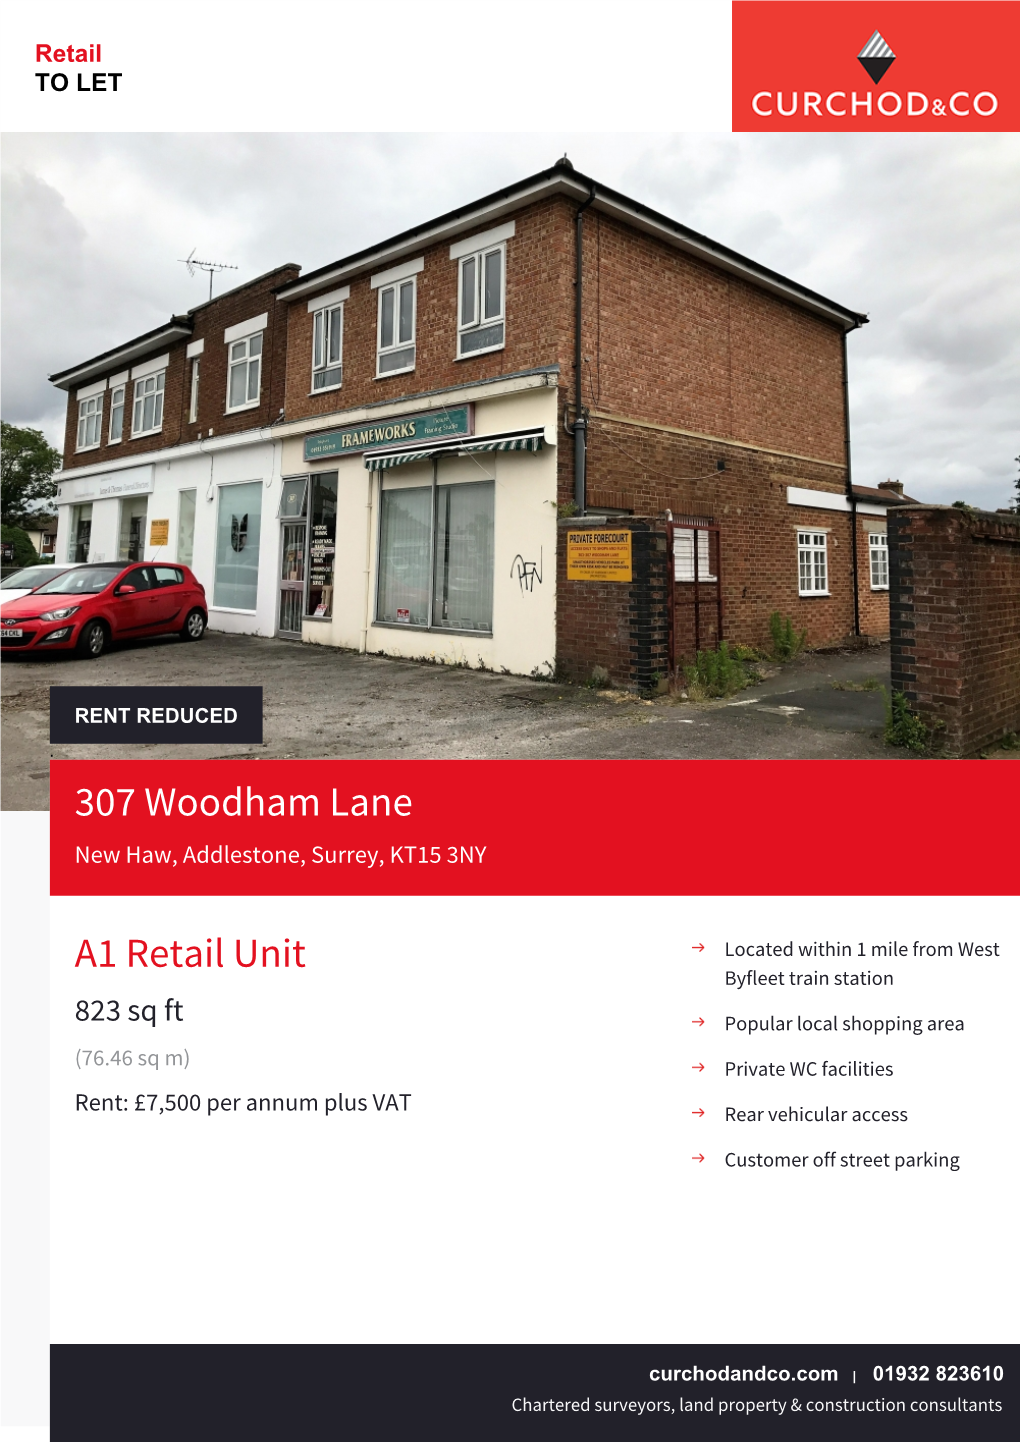 307 Woodham Lane A1 Retail Unit